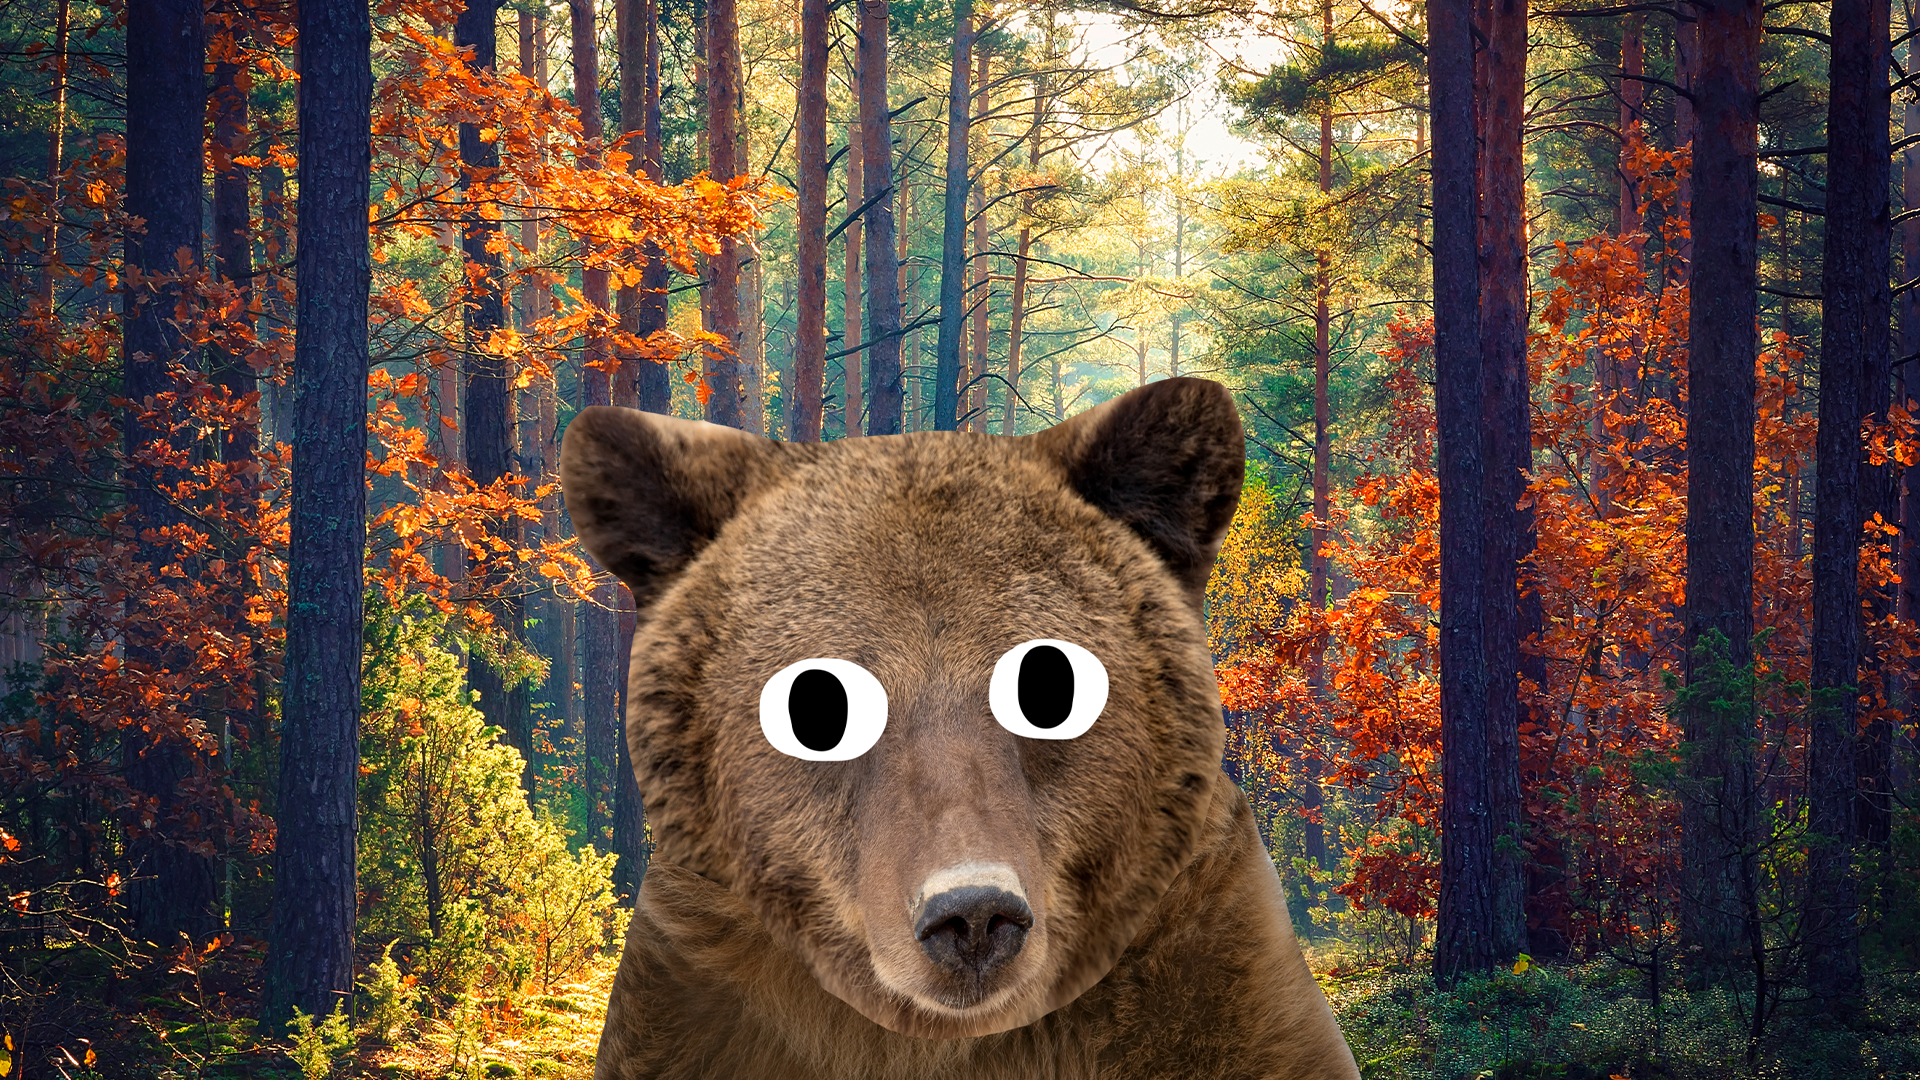 Woodlands with Beano bear